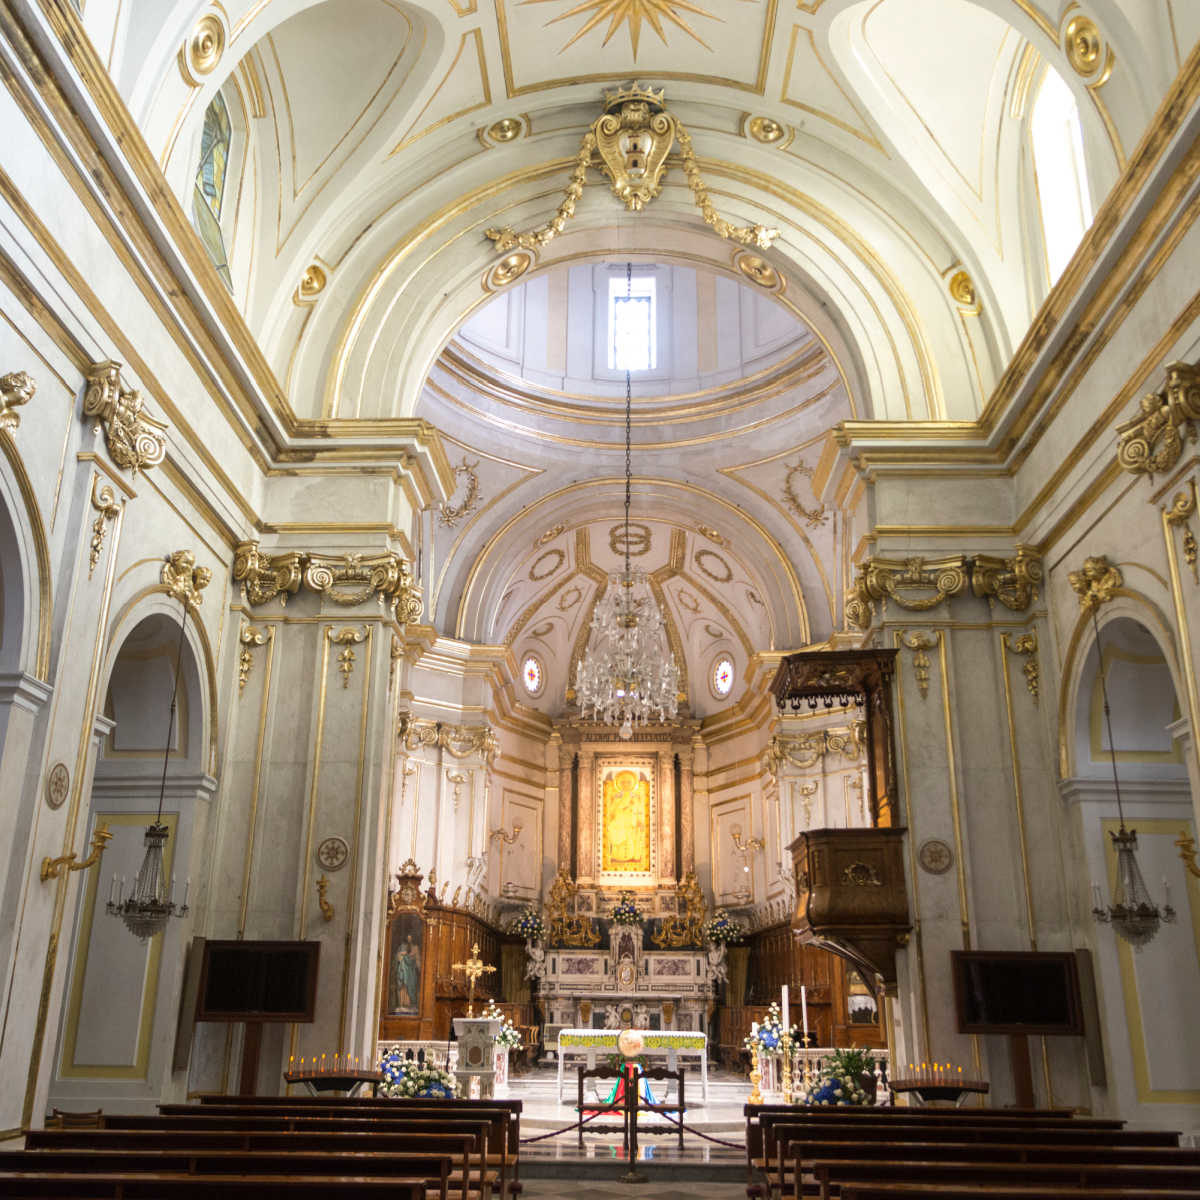 Interiors of a church, Positano, Amalfi Coast, Salerno, Campania, Italy